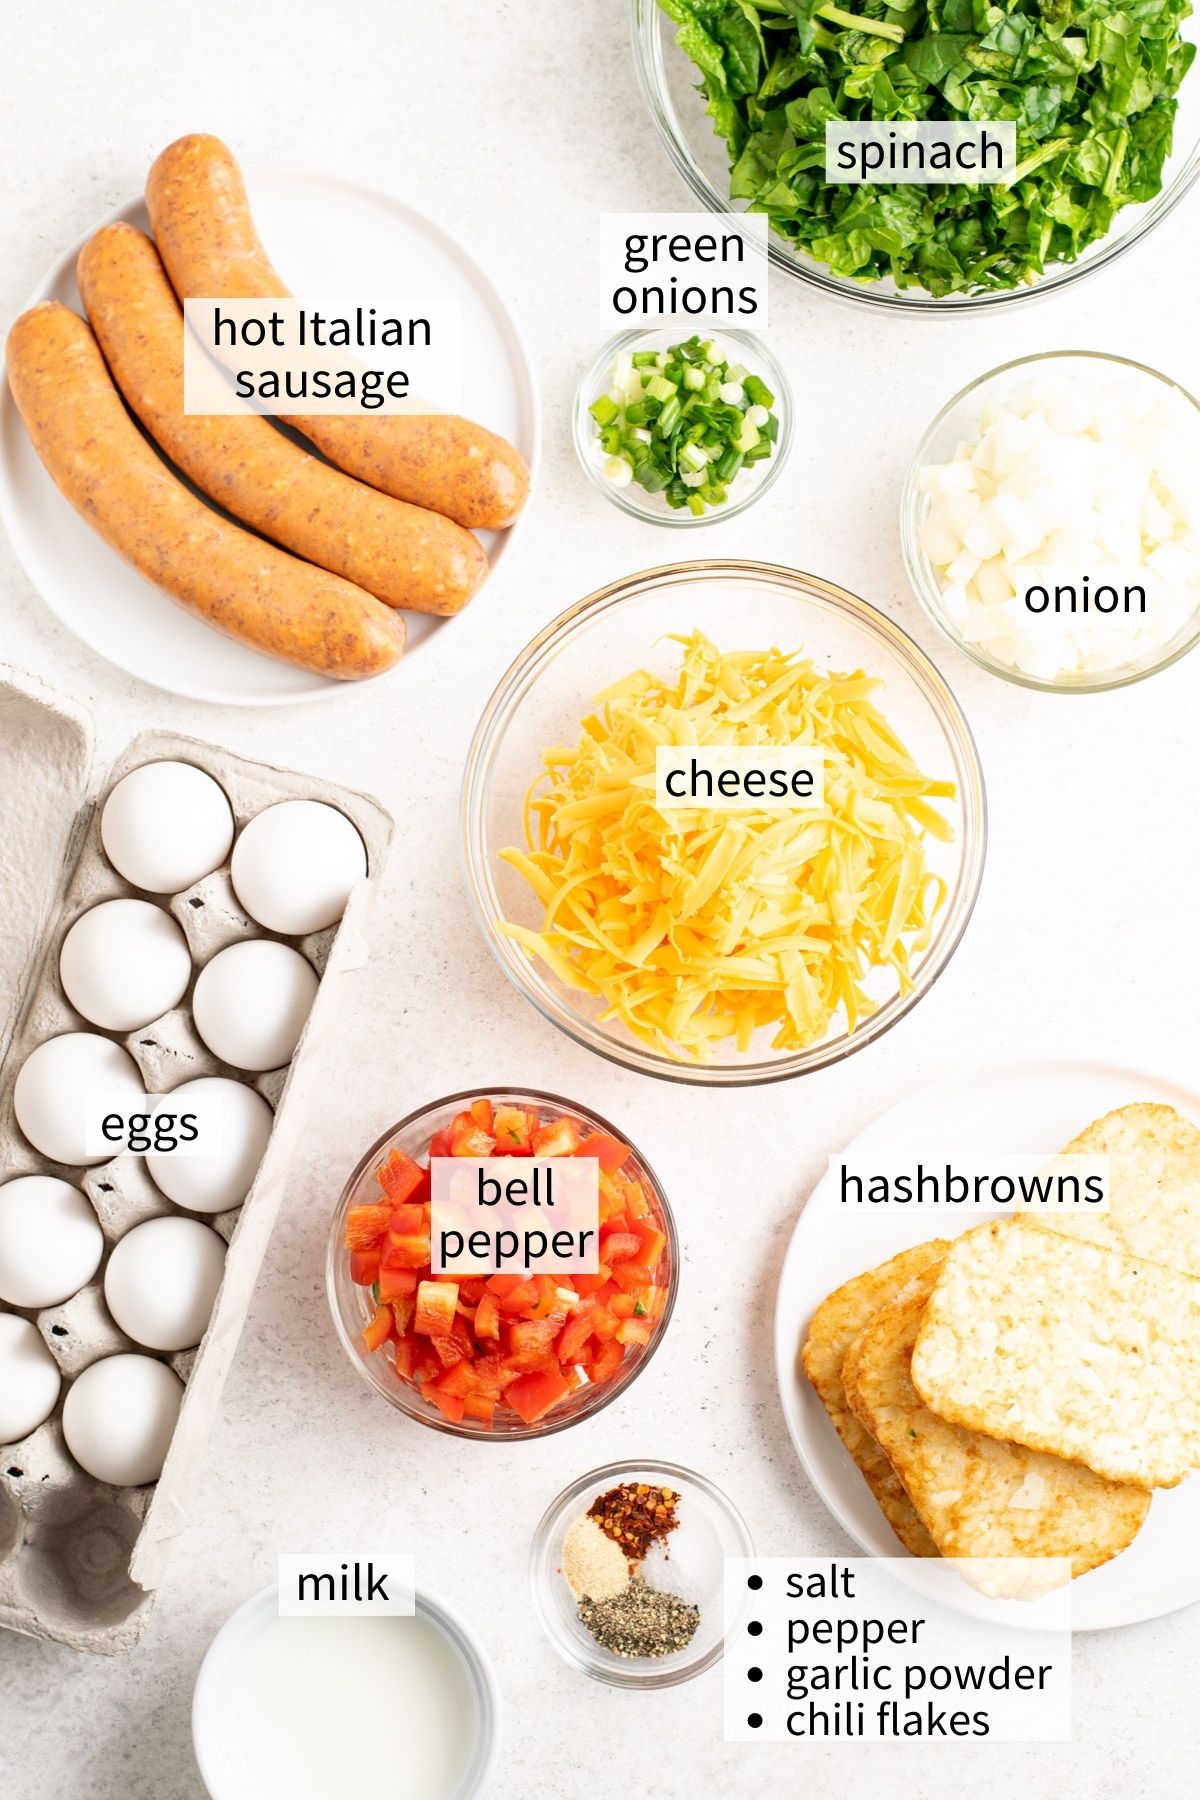 ingredients to make gluten free breakfast casserole.